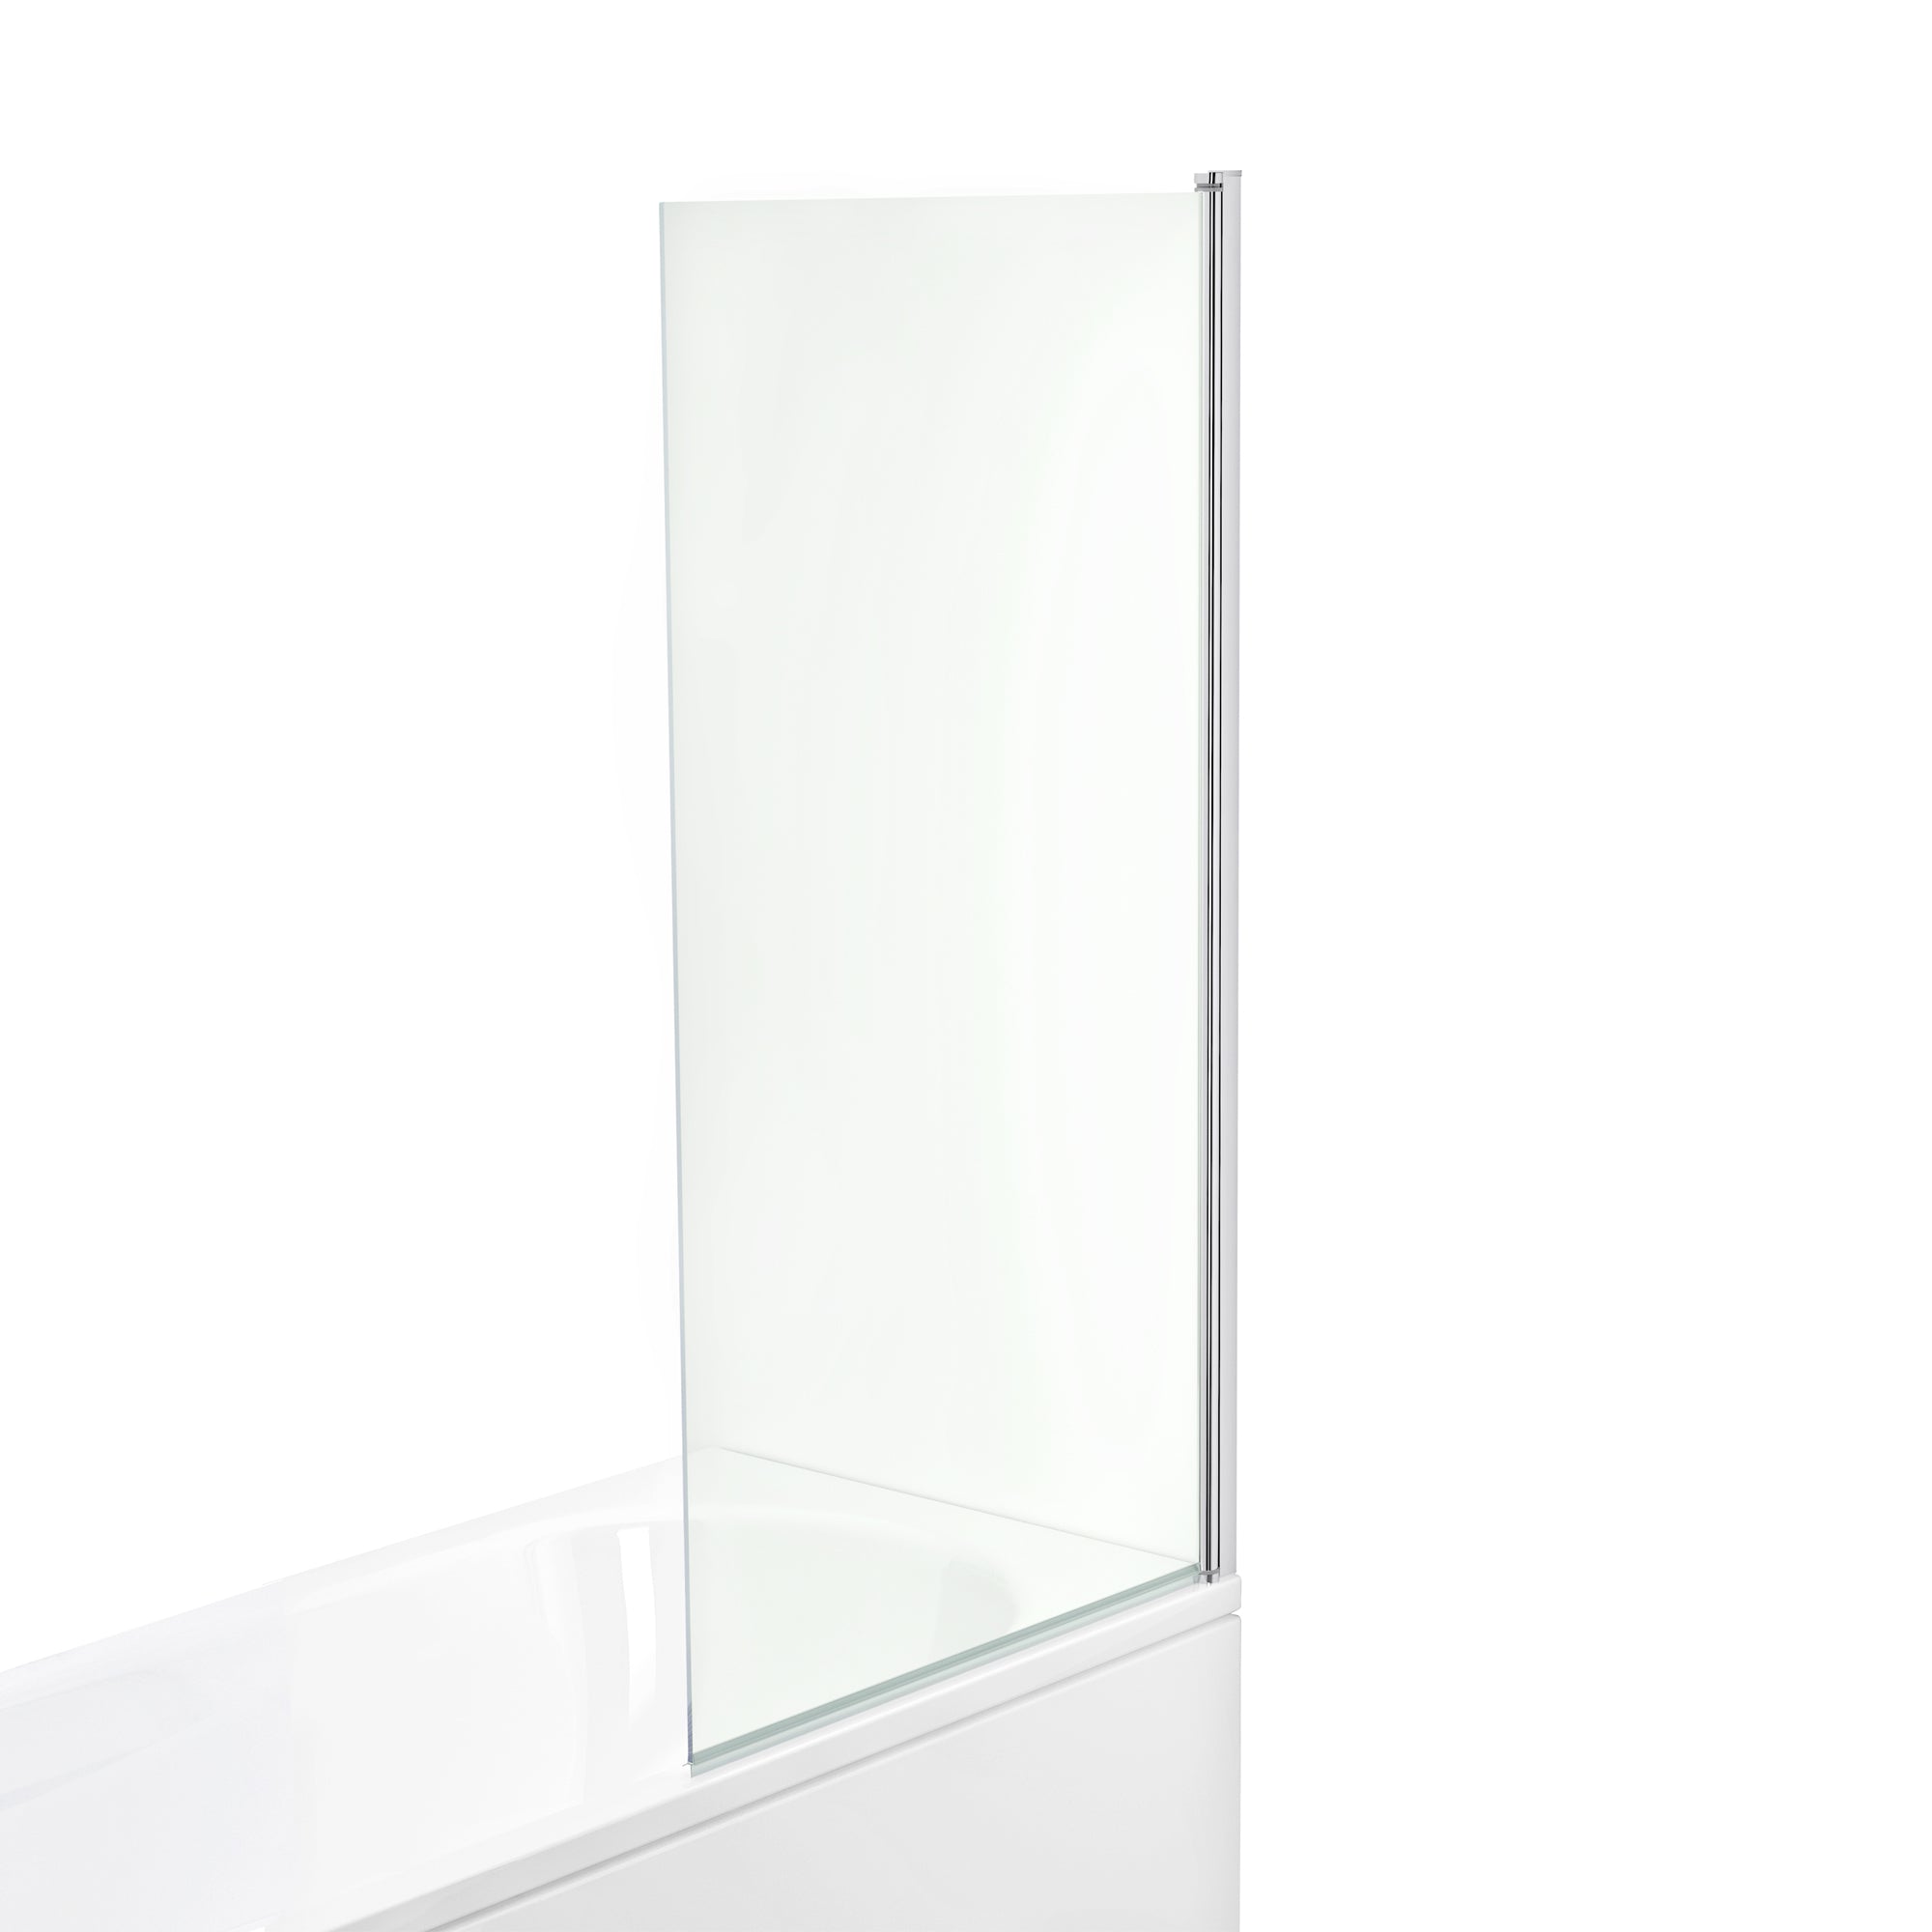 Modern Square Edge Straight Bath Screen - 6mm Glass - 1400mm x 800mm - Chrome